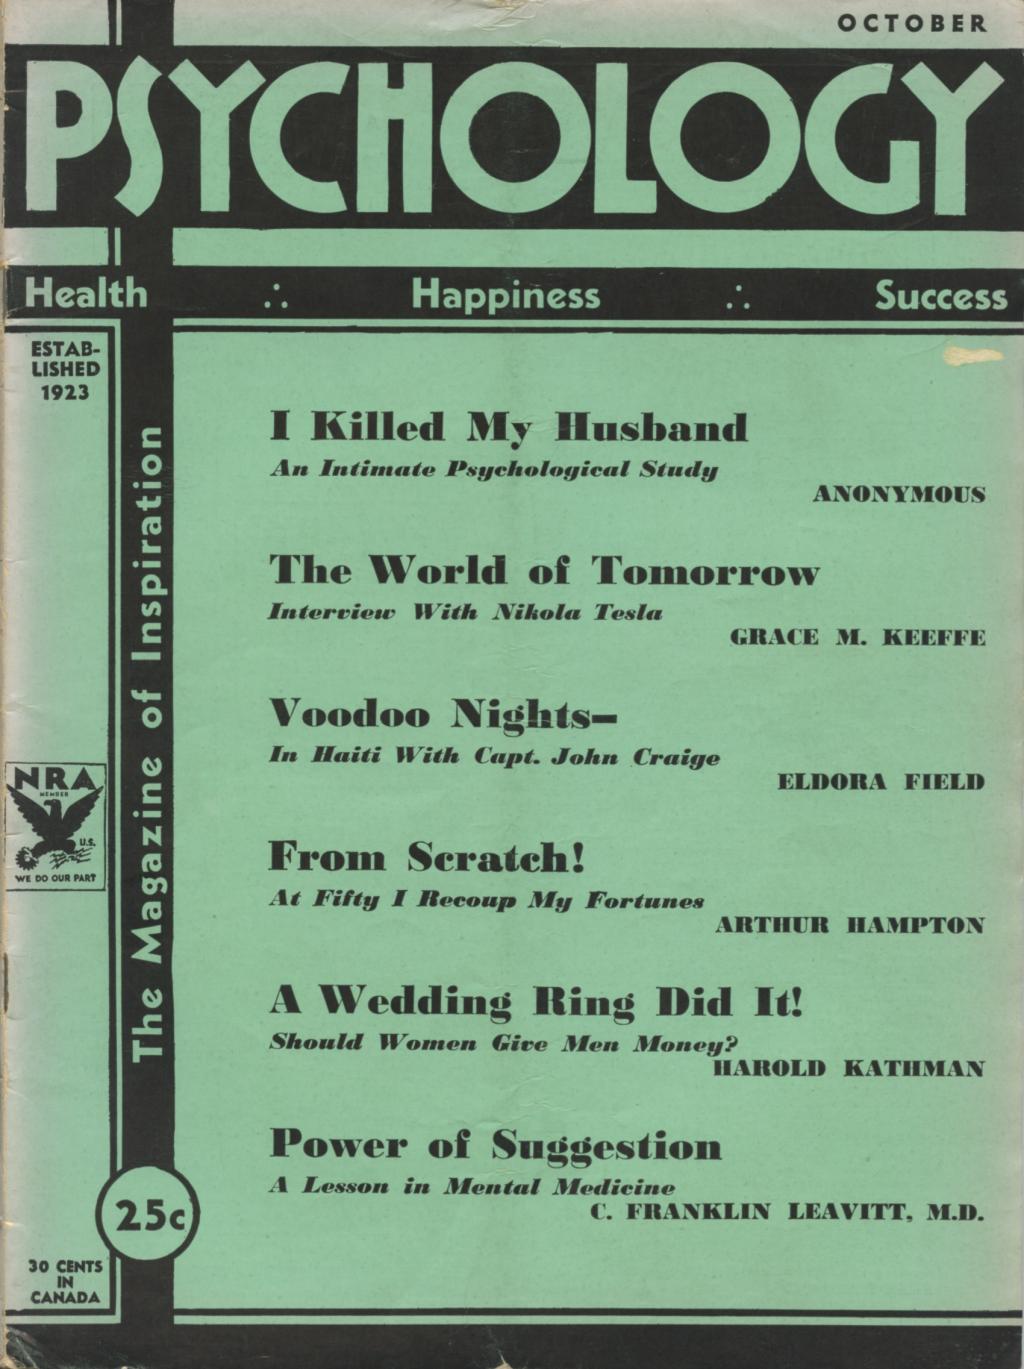 1933 Psychology Magazine Cover